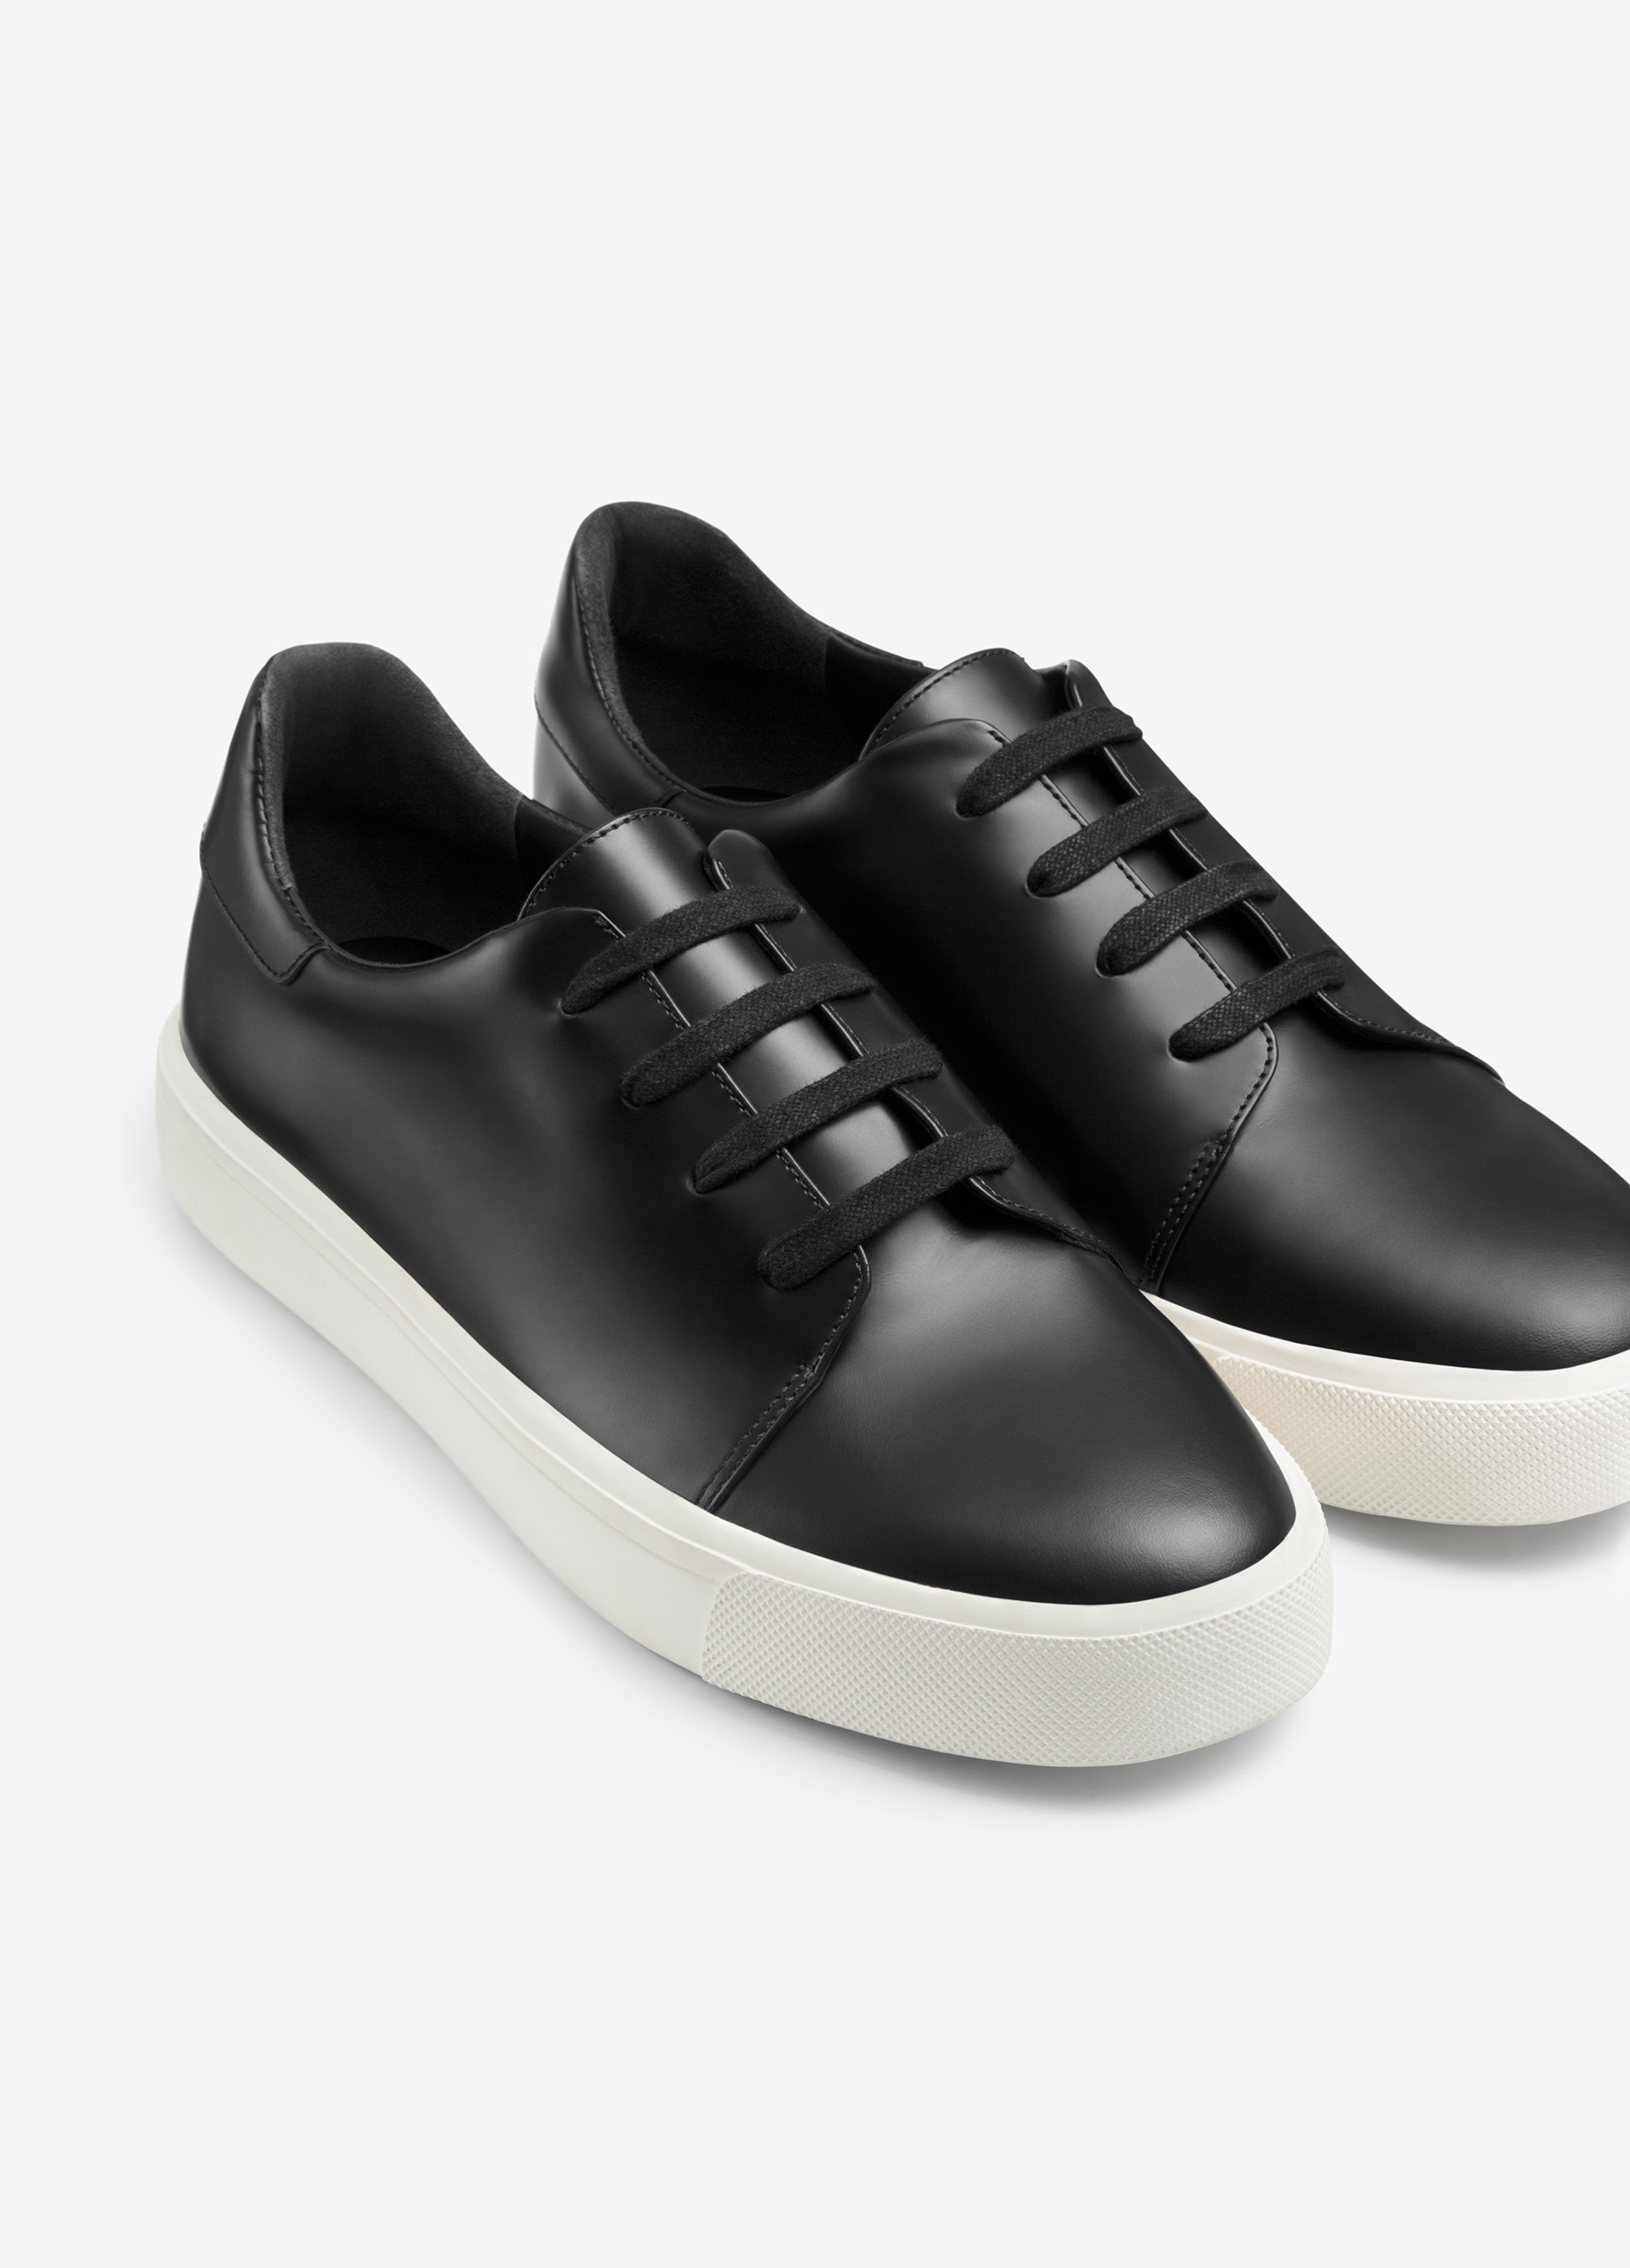 Lyst - Vince Bale Leather Sneaker in Black for Men